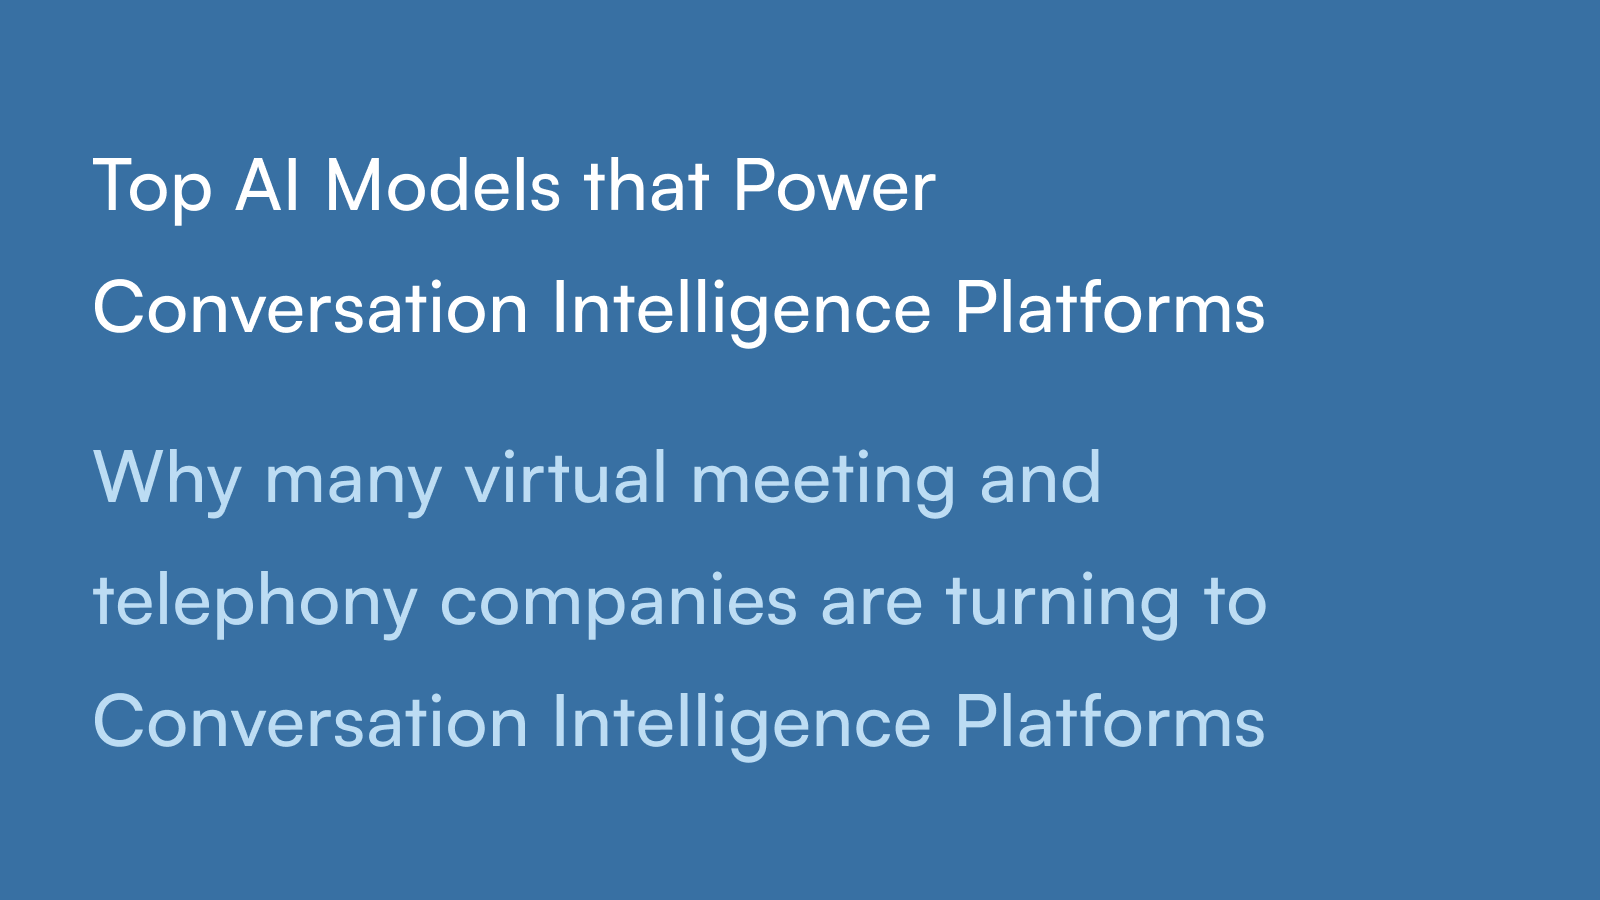 Top AI Models that Power Conversation Intelligence Platforms